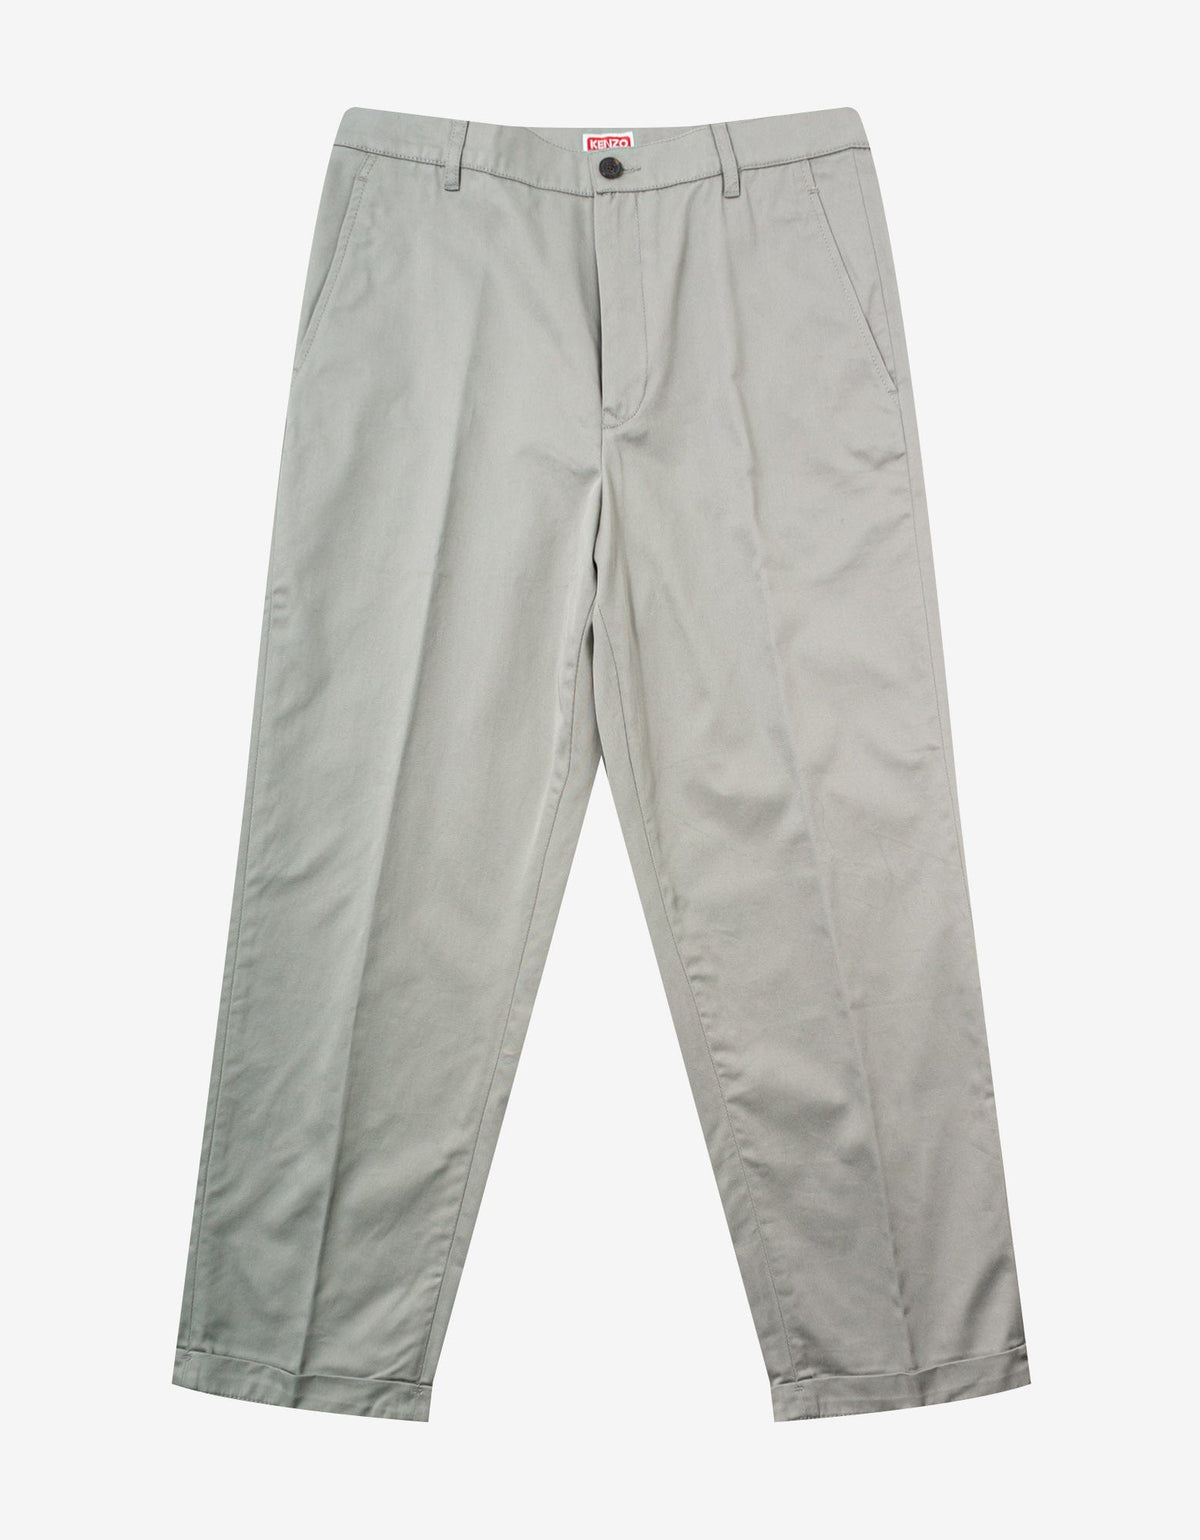 Kenzo Grey Chino Trousers